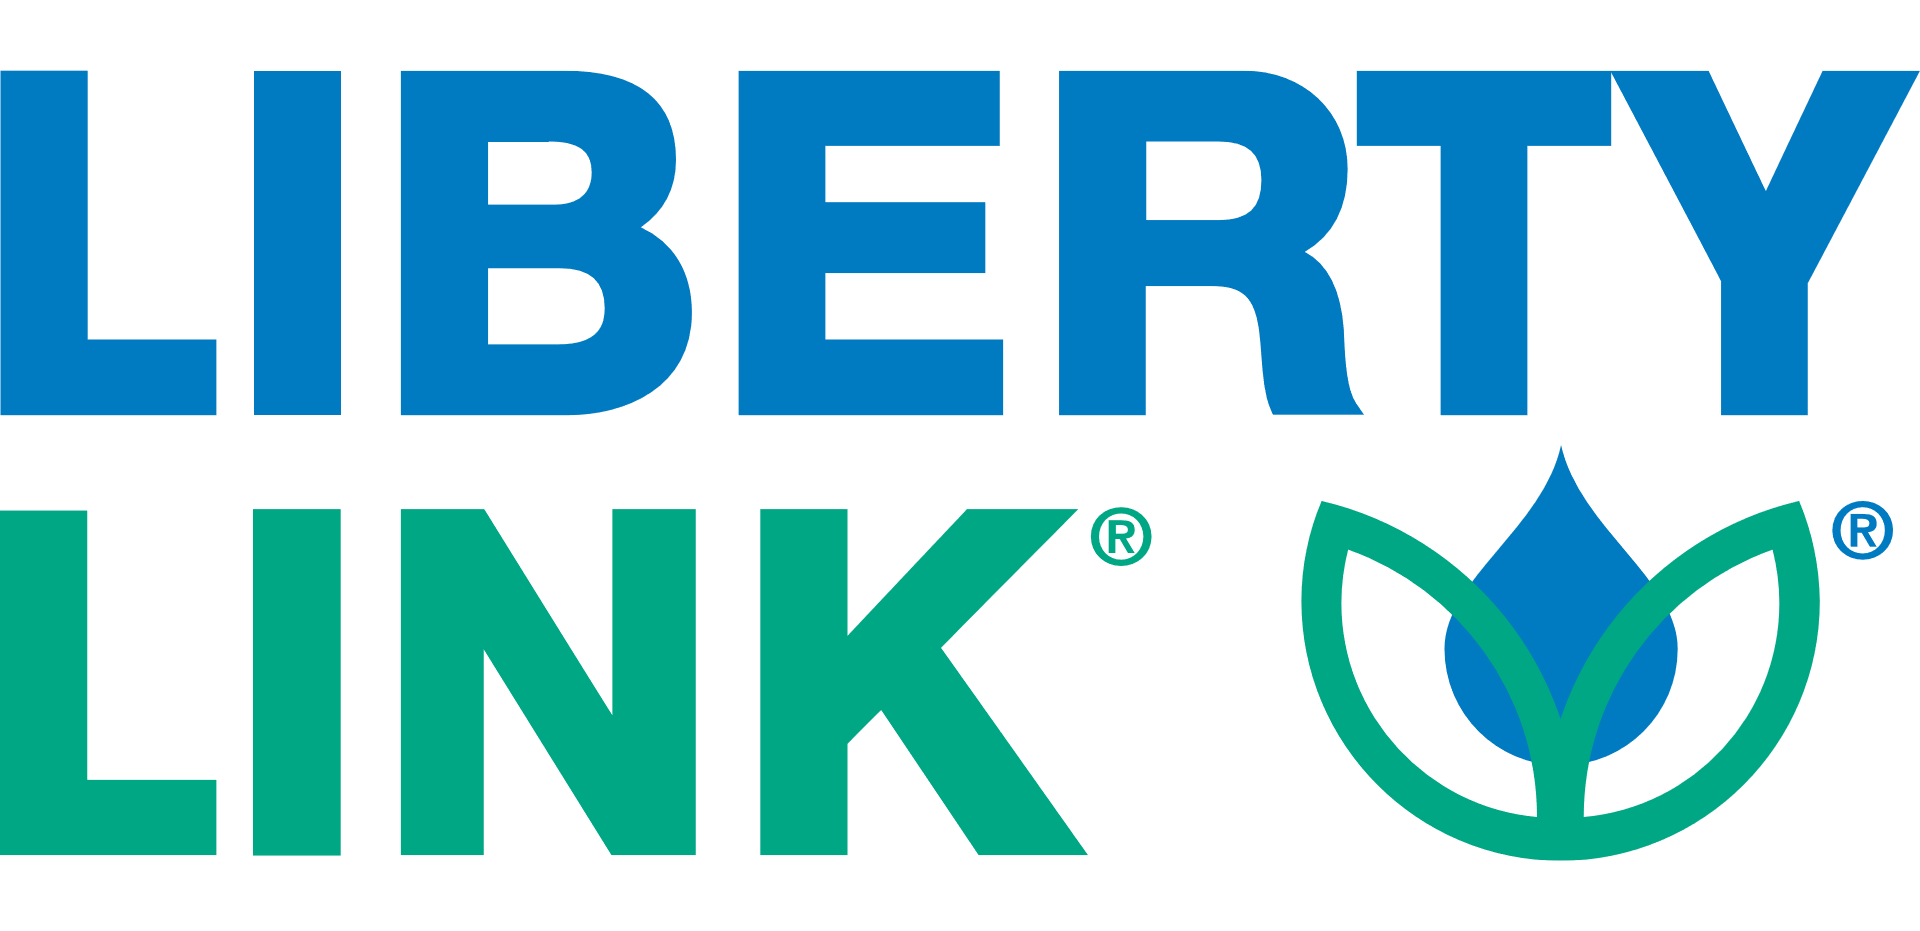 LibertyLink Logo